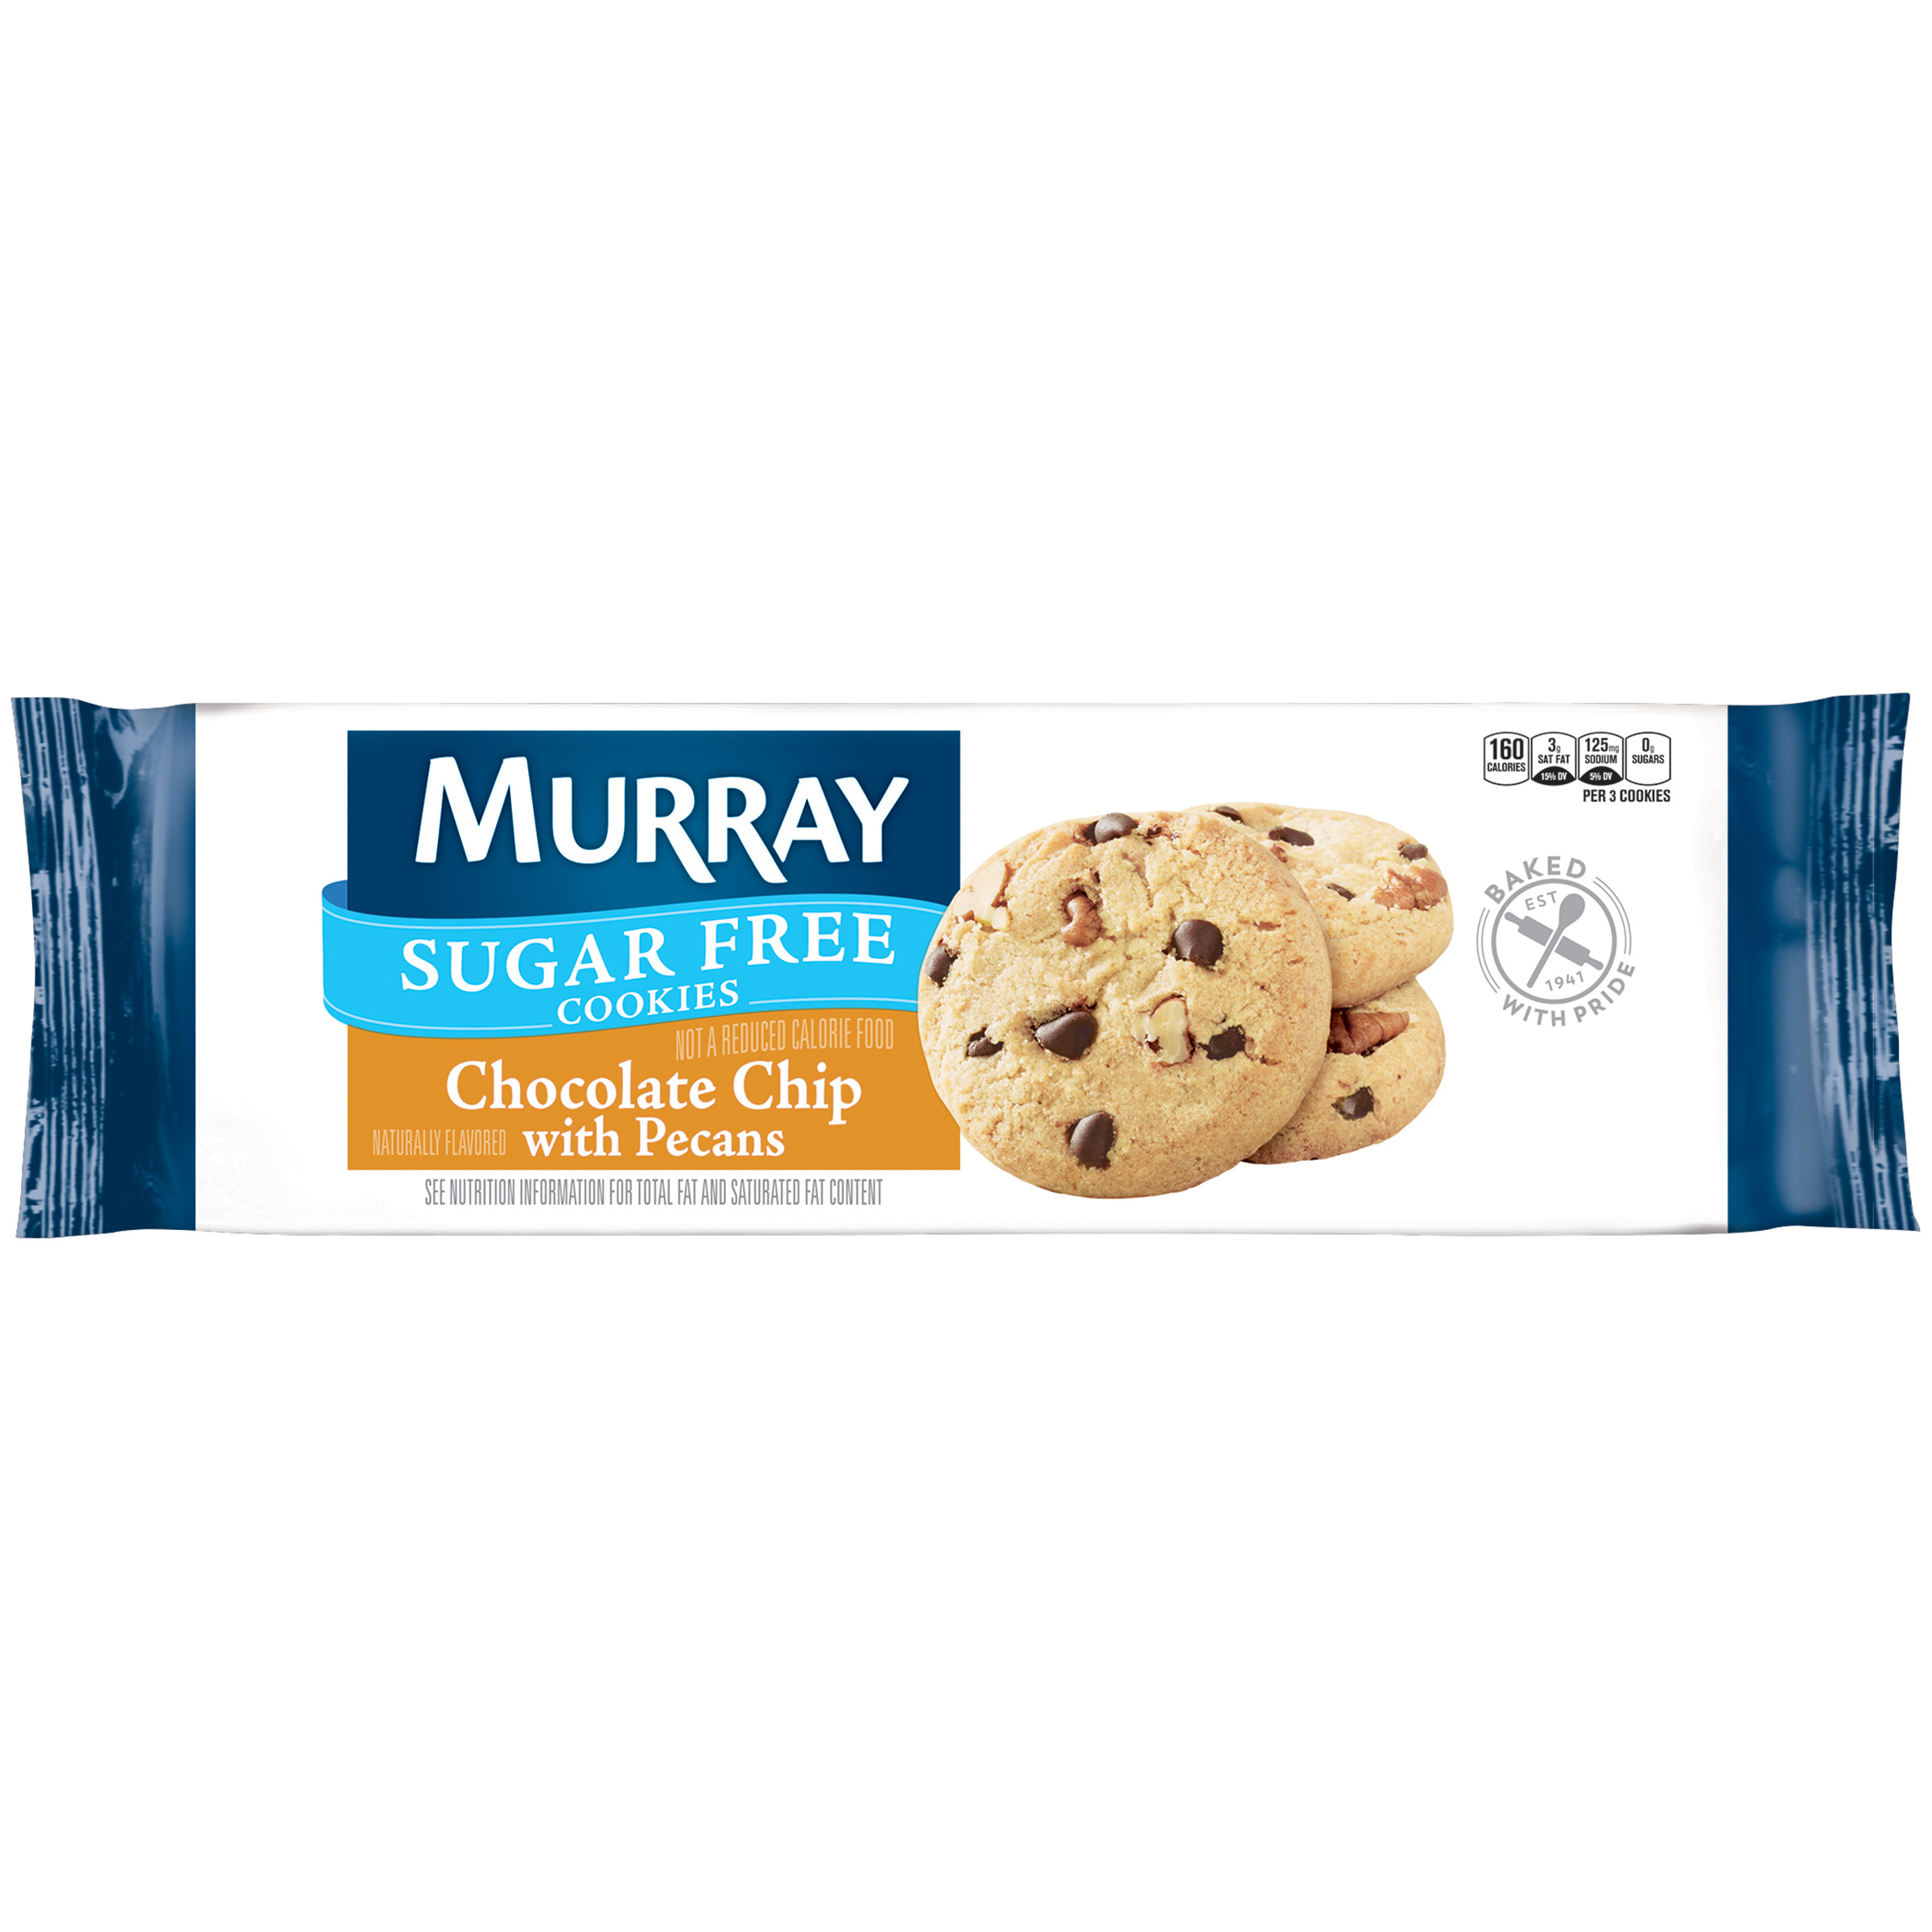 Murray Sugar Free Cookies
 MURRAY SUGAR FREE Murray Cookies Chocolate Chip with